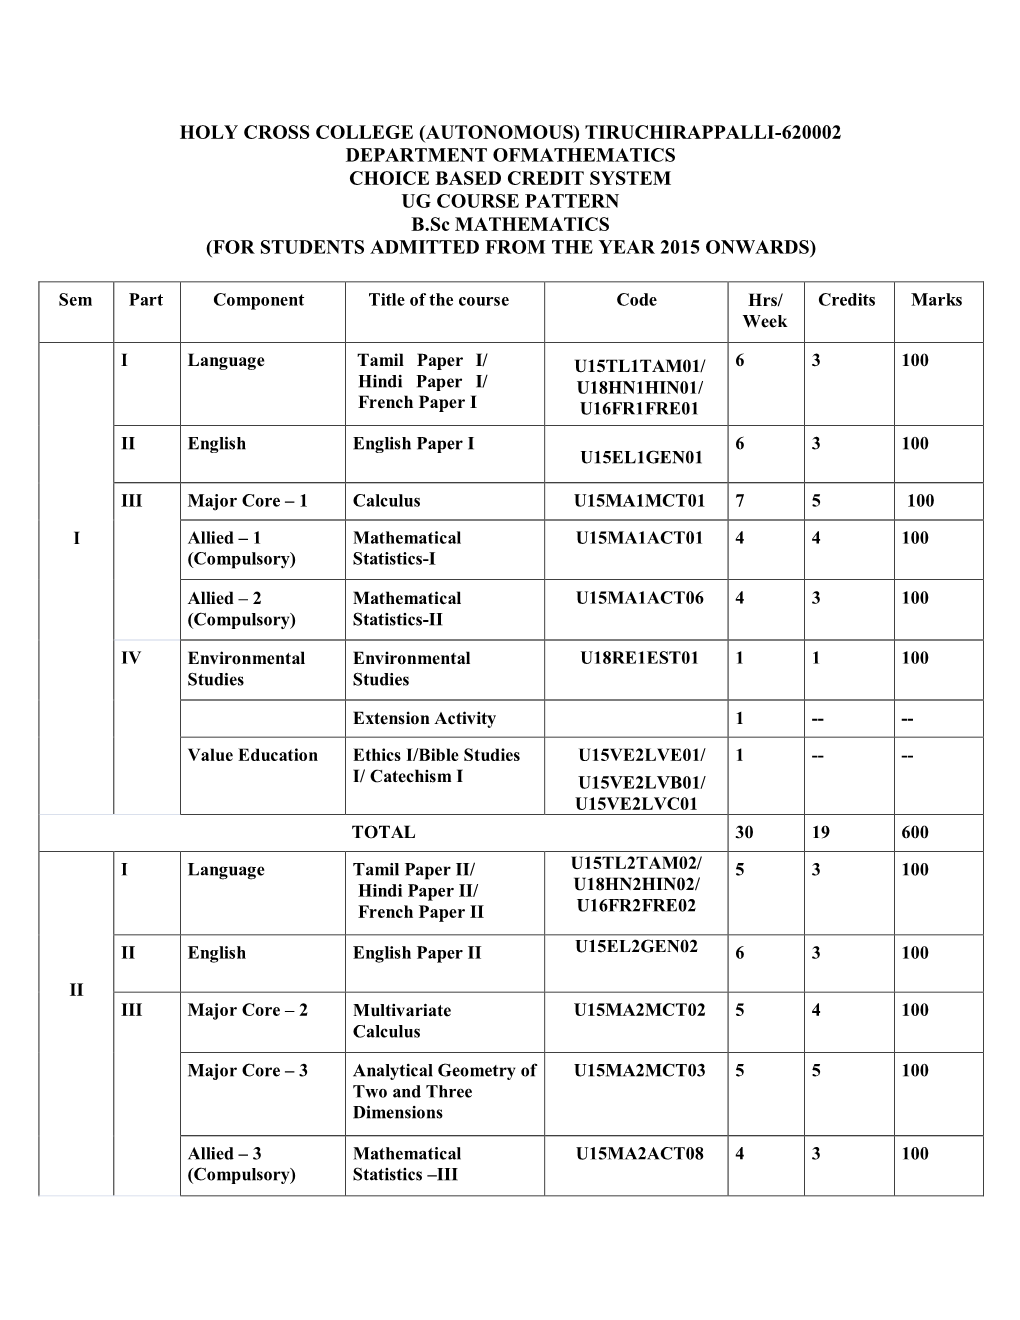 Holy Cross College (Autonomous) Tiruchirappalli-620002 Department Ofmathematics Choice Based Credit System Ug Course Pattern